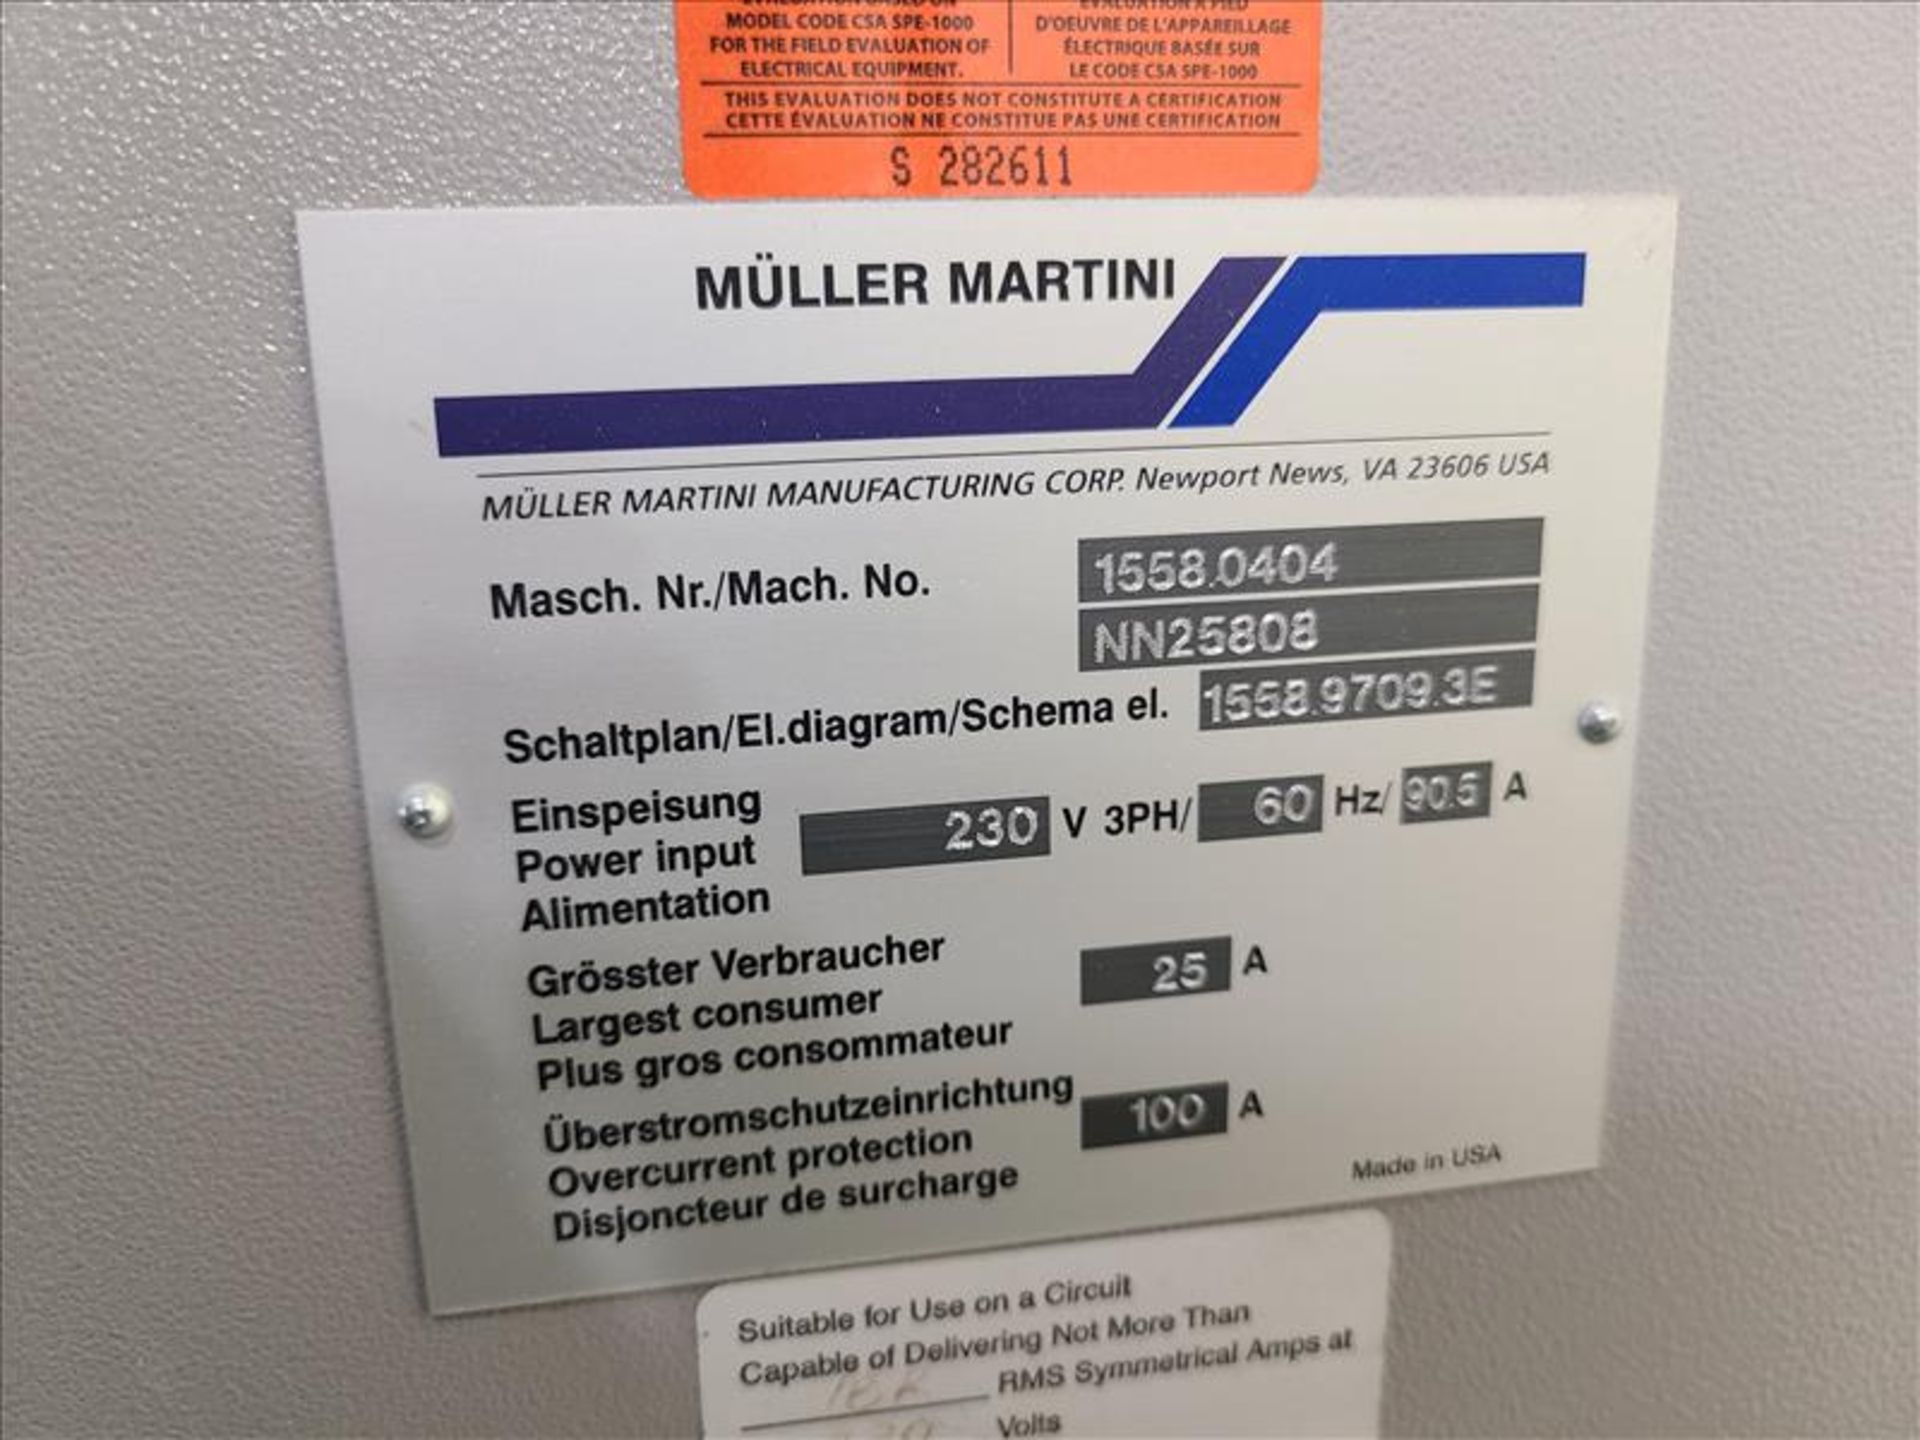 Muller Martini,Valore, 8 Station Saddle Stitcher, model 1558.0404, S/N.NN25808, 230V, 3 Phase, - Bild 5 aus 13